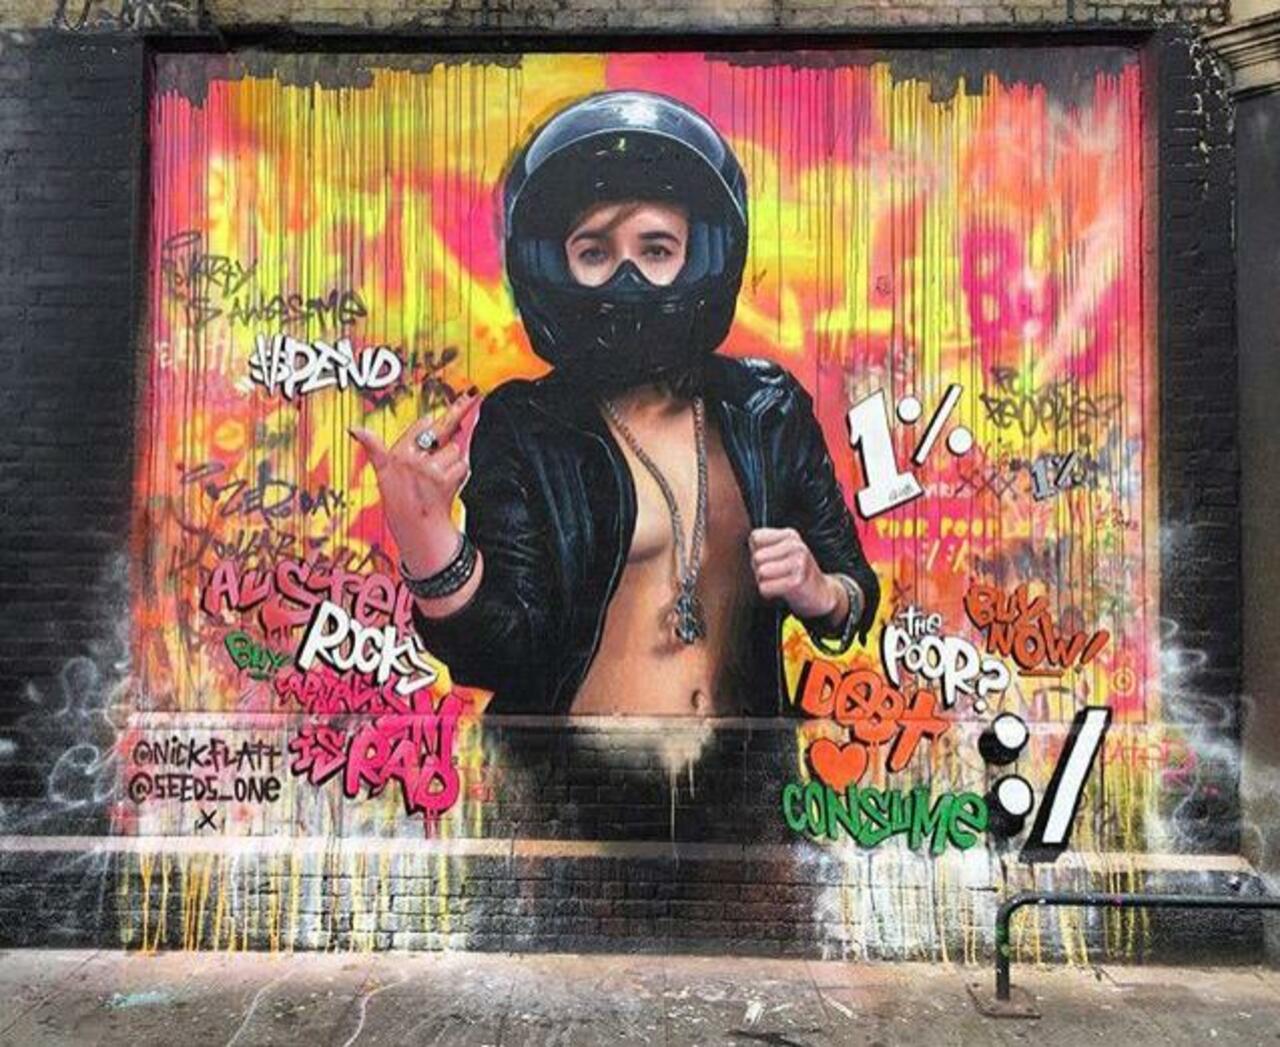 New Street Art collab by Nick Flatt &  Seeds One in London 

#art #graffiti #mural #streetart http://t.co/EHlIyDI9Bz